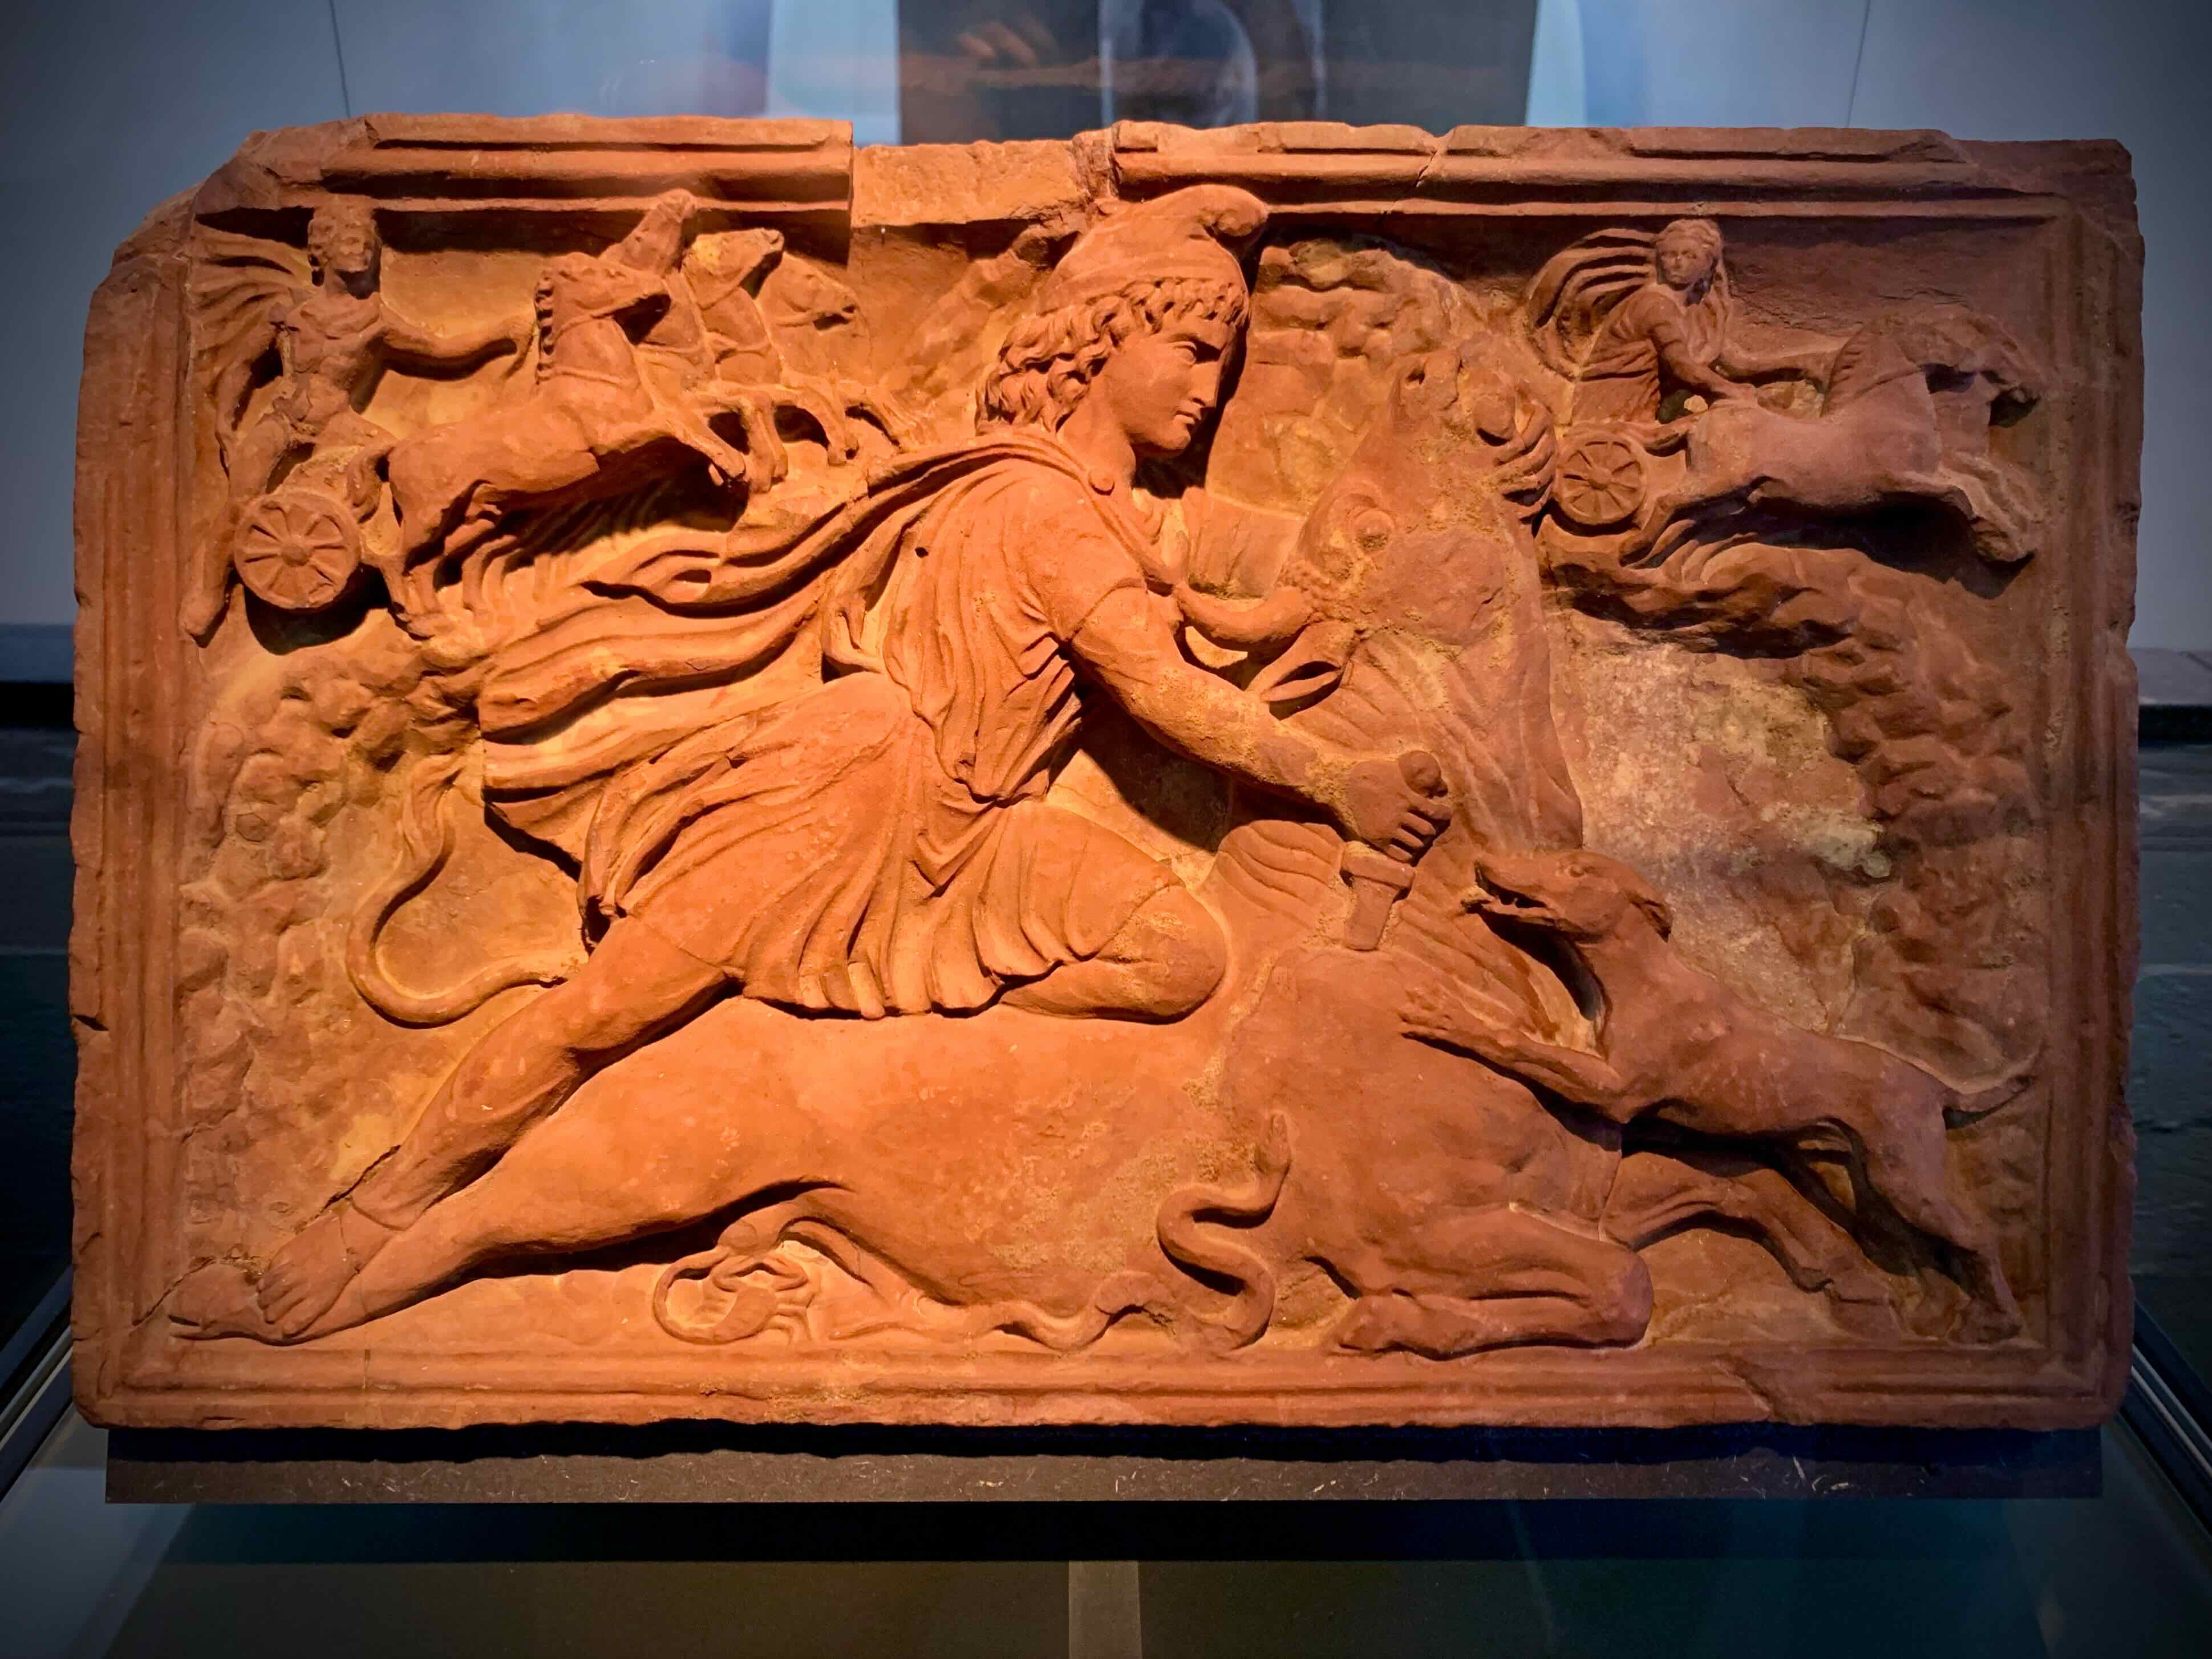 Tauroctony relief exposed at Allard Pierson Museum